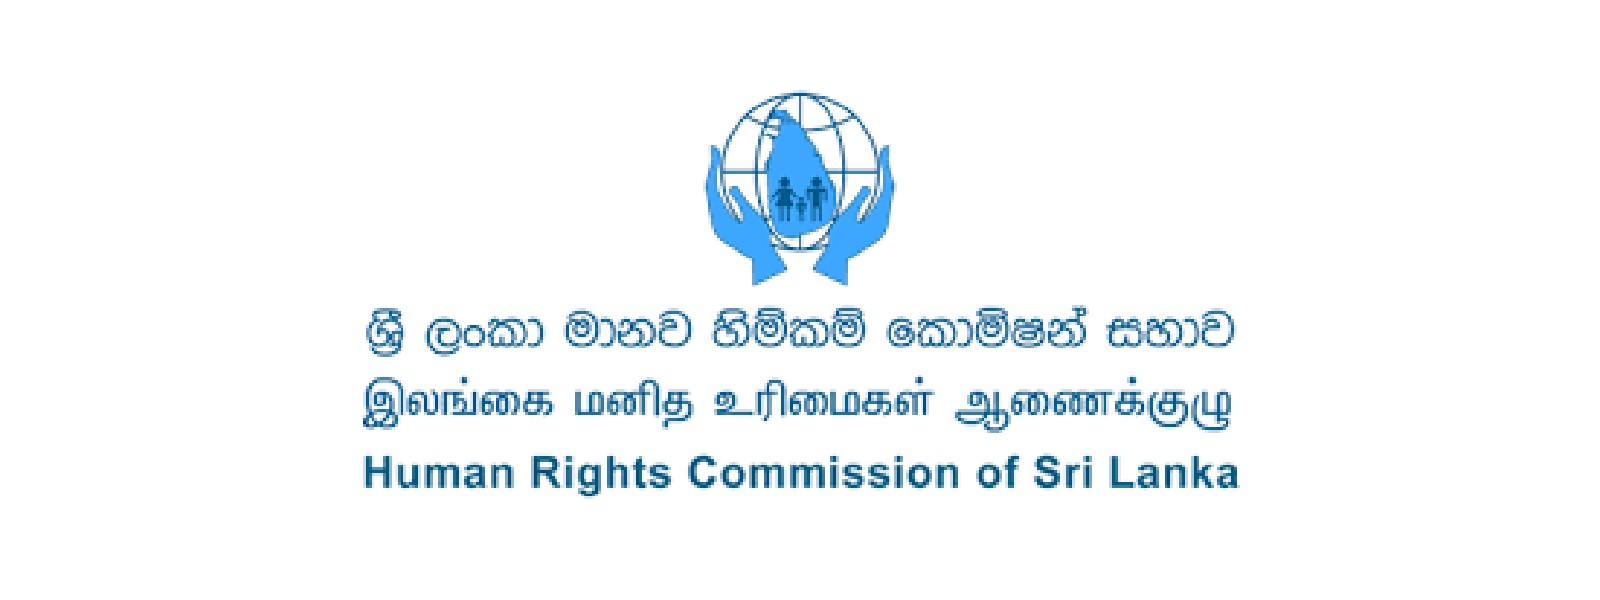 Sri Lanka’s Human Rights Commission supports PTA abolishment